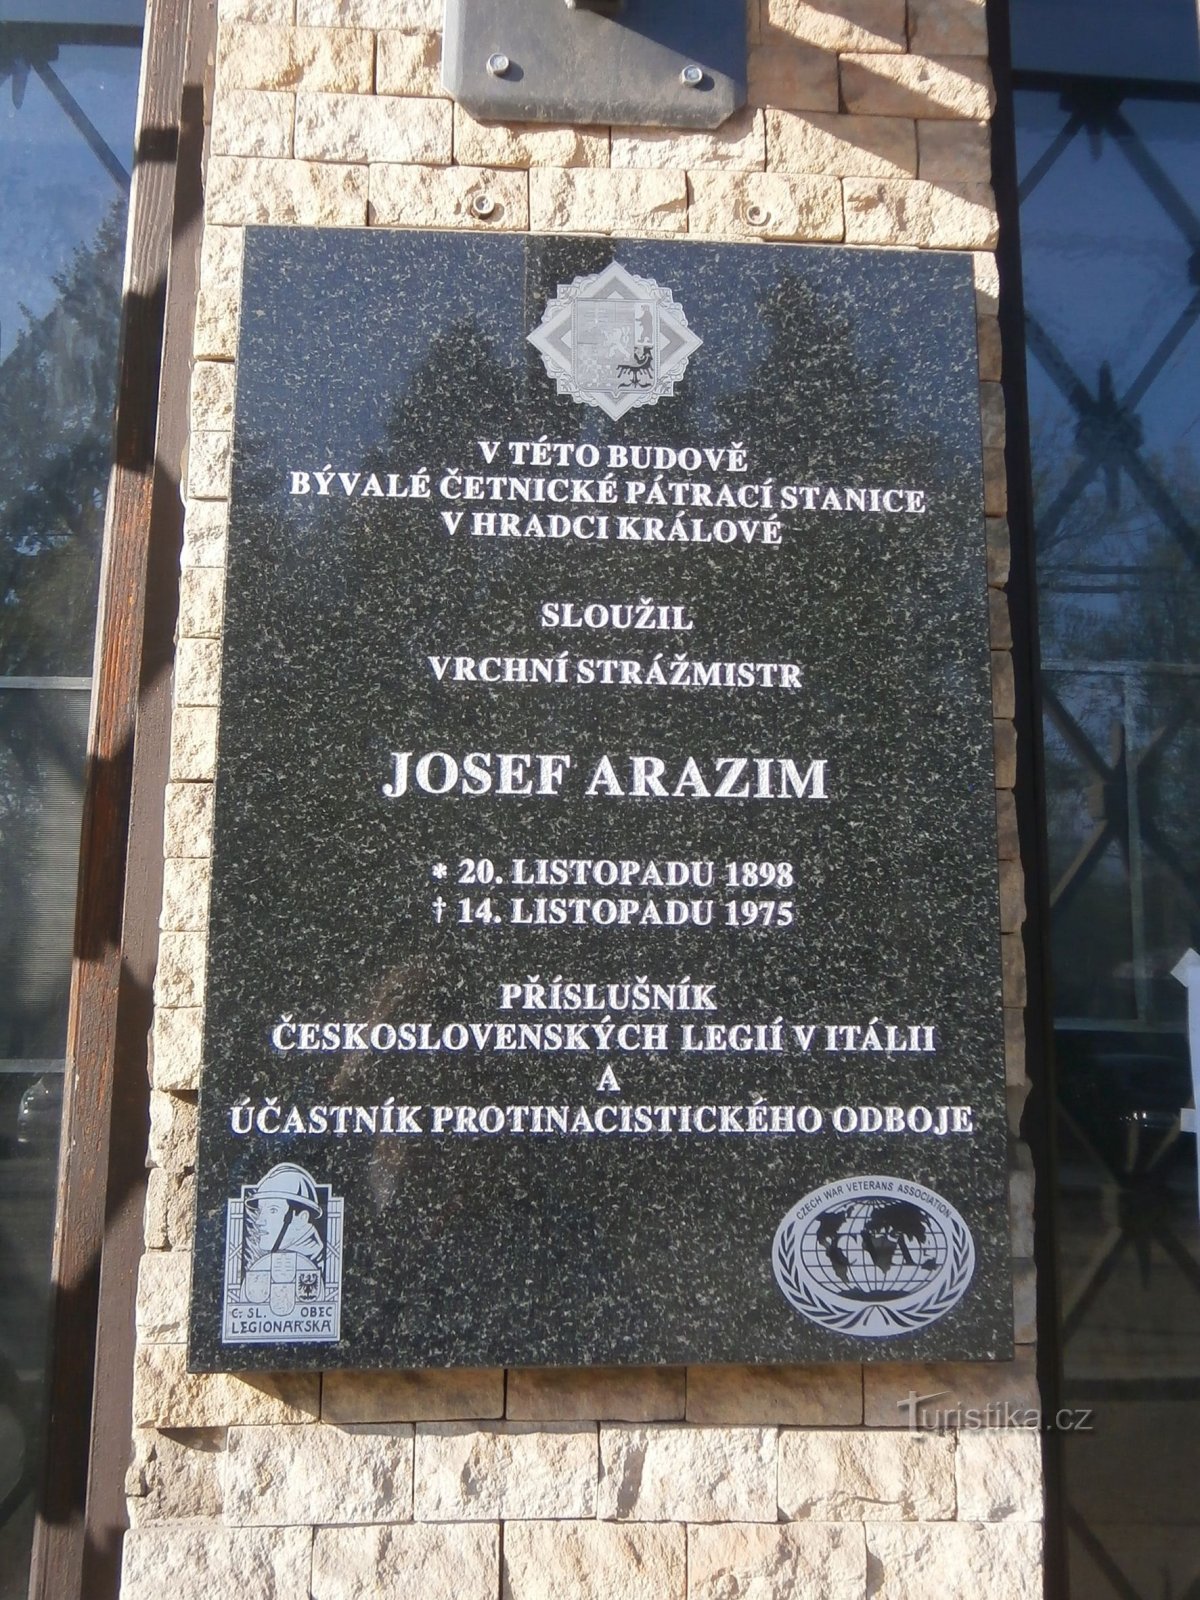 Targa commemorativa a Josef Arazím (Hradec Králové, 14.4.2017 aprile XNUMX)